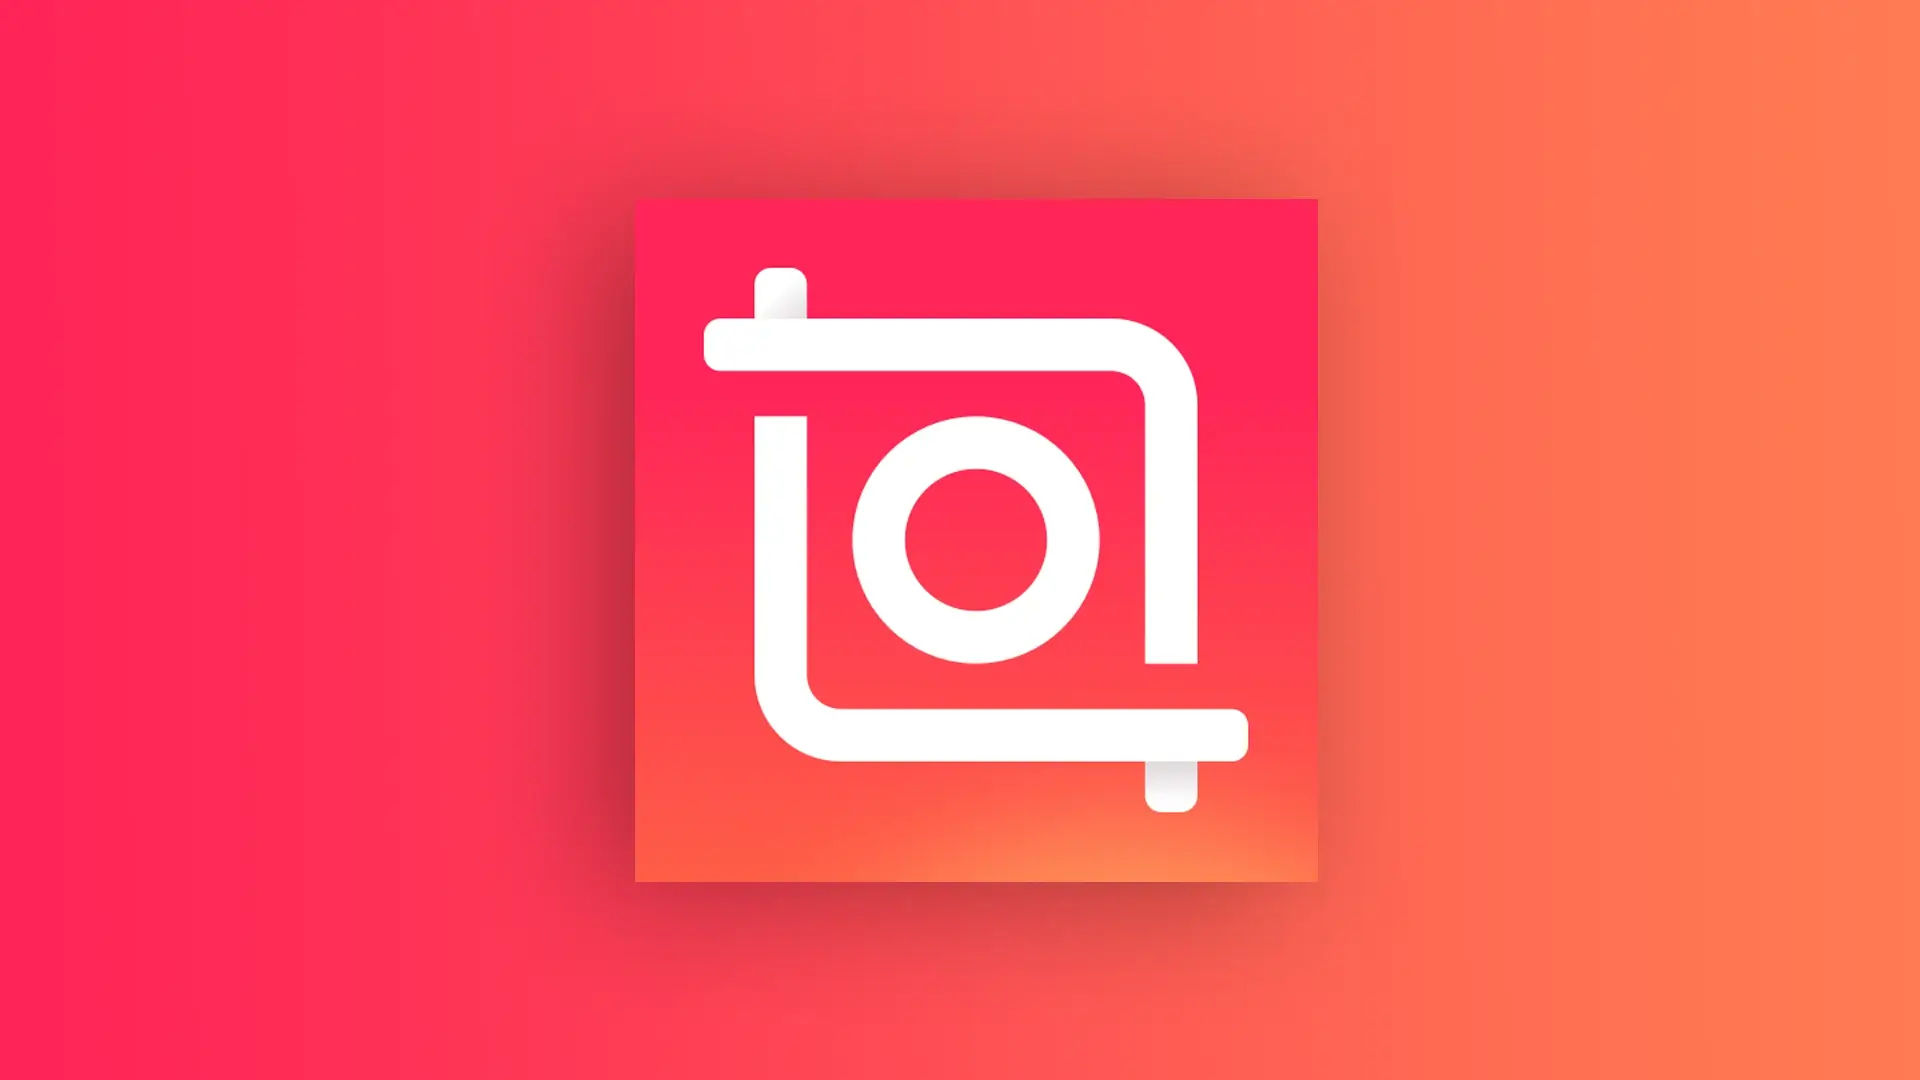 Instagram logo on pink and orange background.